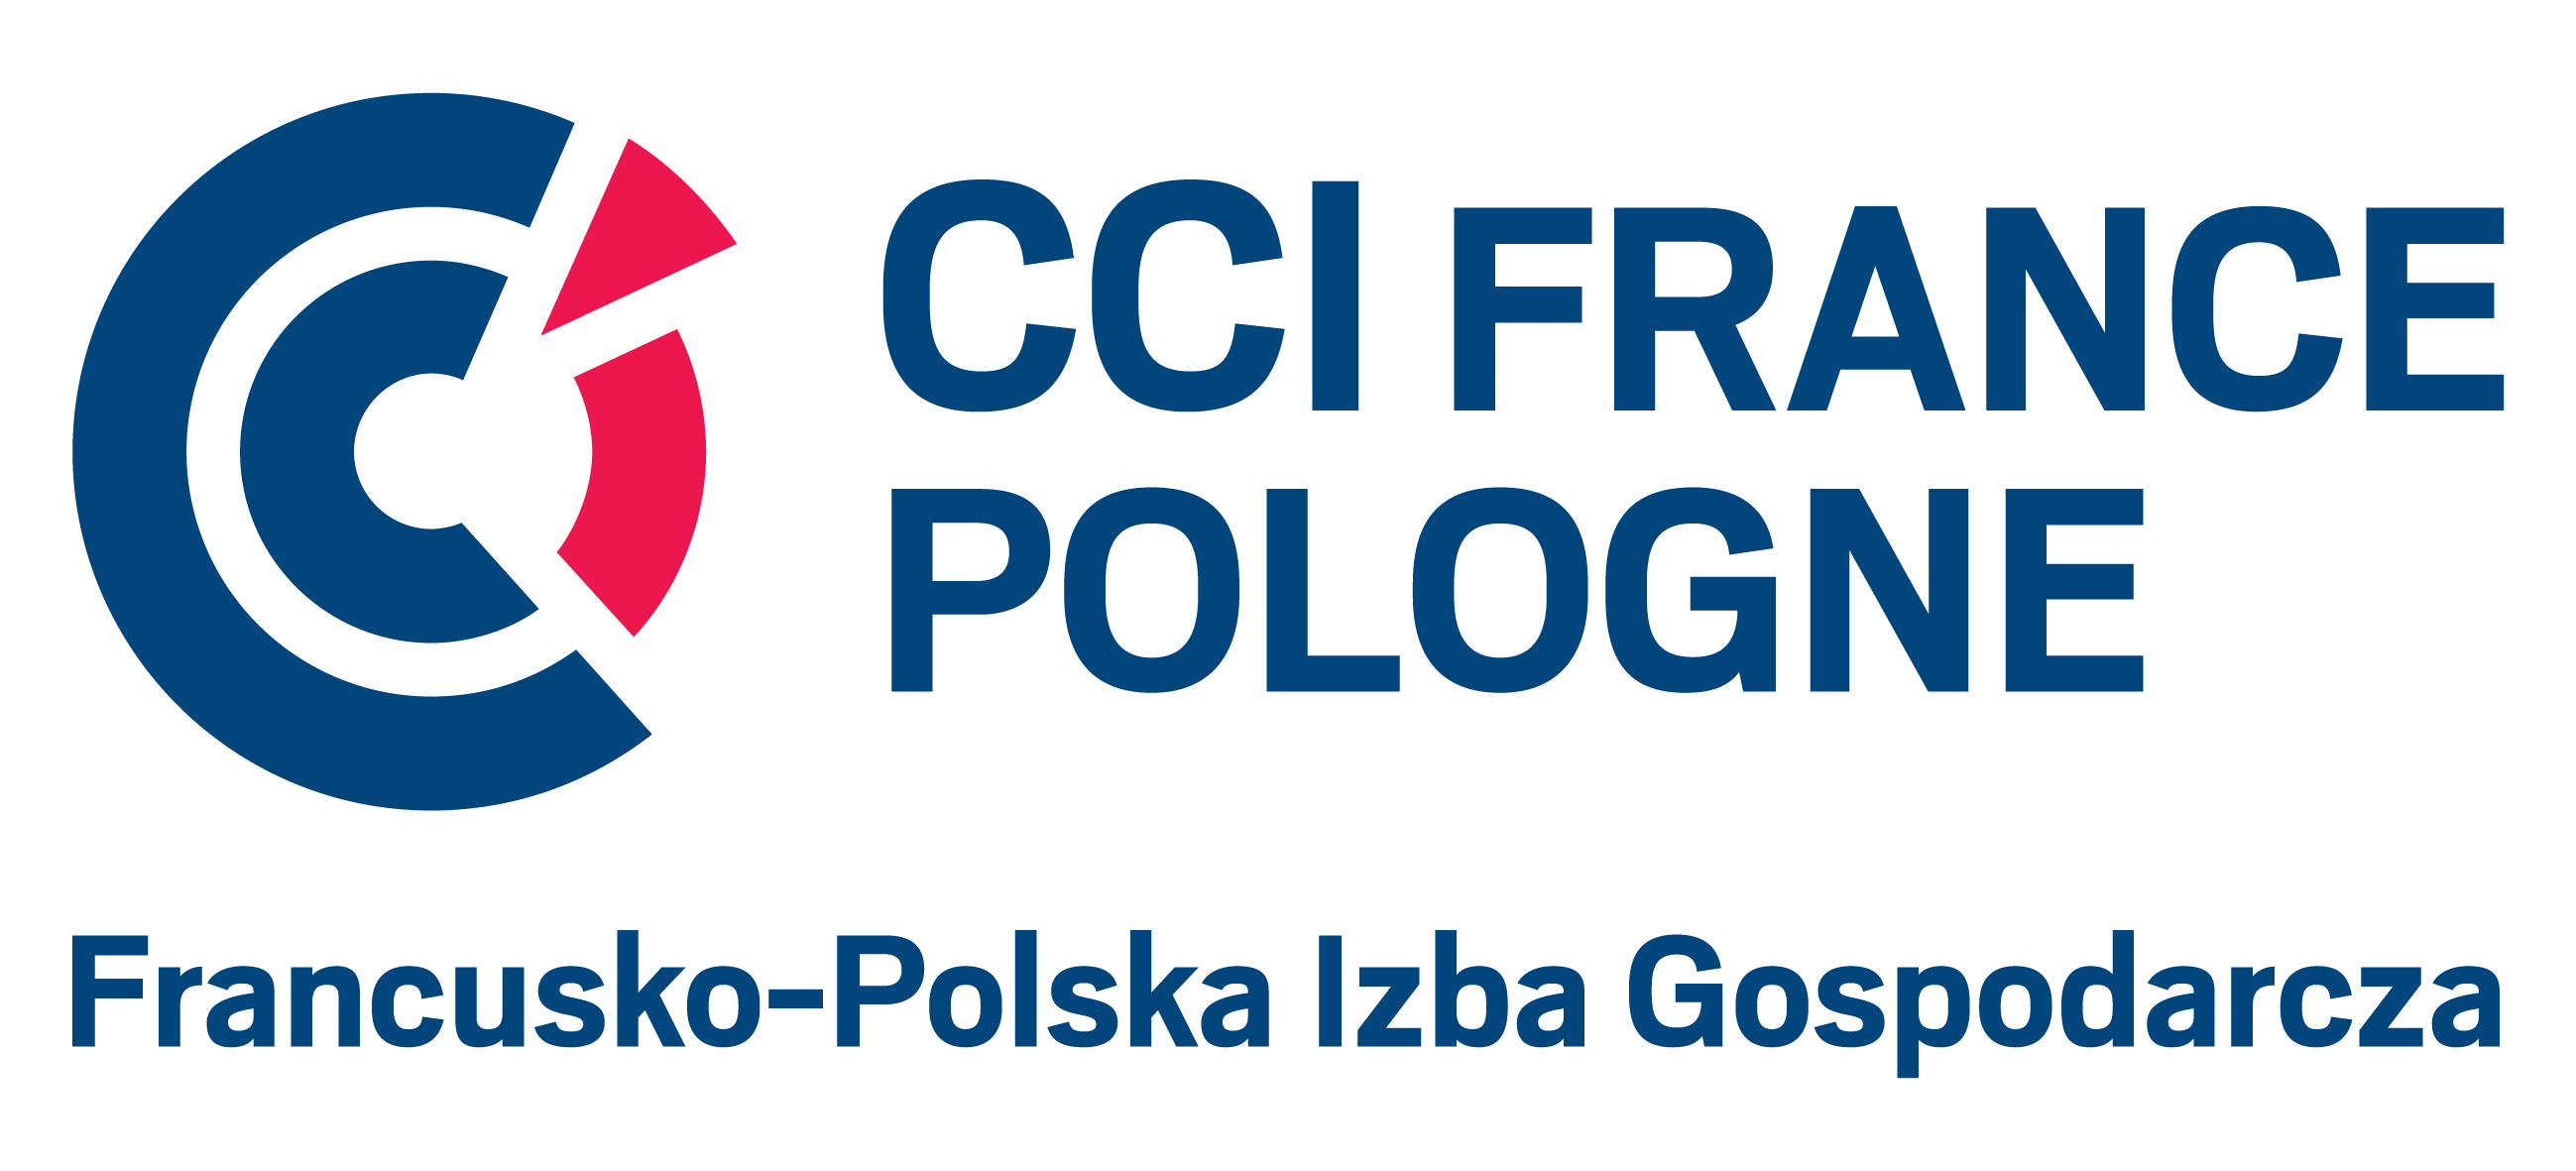 CCI FRANCE POLOGNE logo